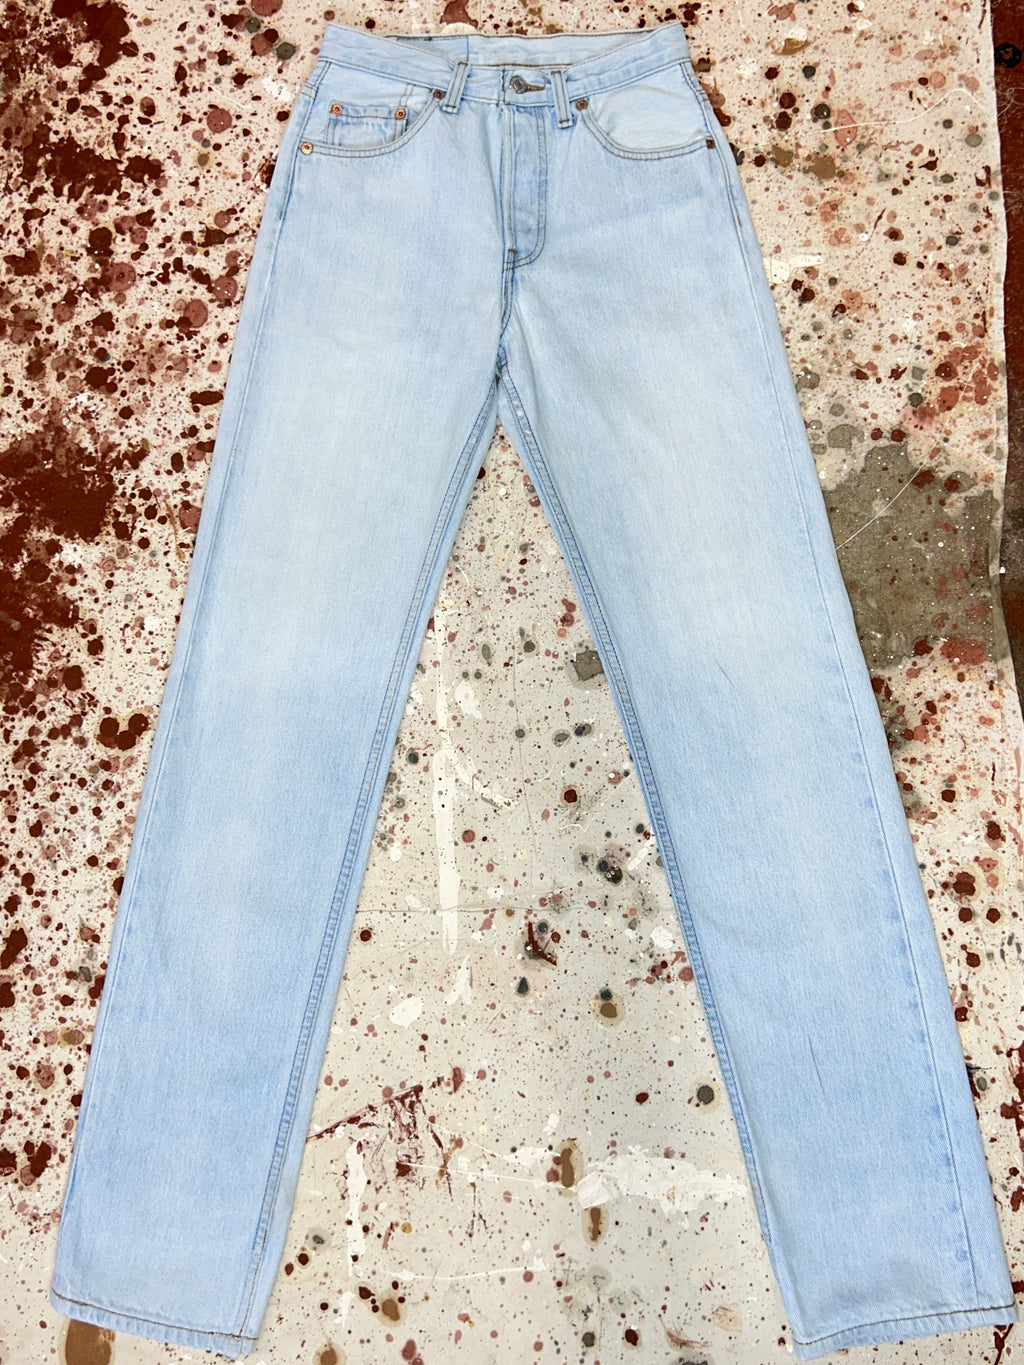 Vintage 1980's Levi's 501 Light Wash Denim Jeans (JYJ0424-157)